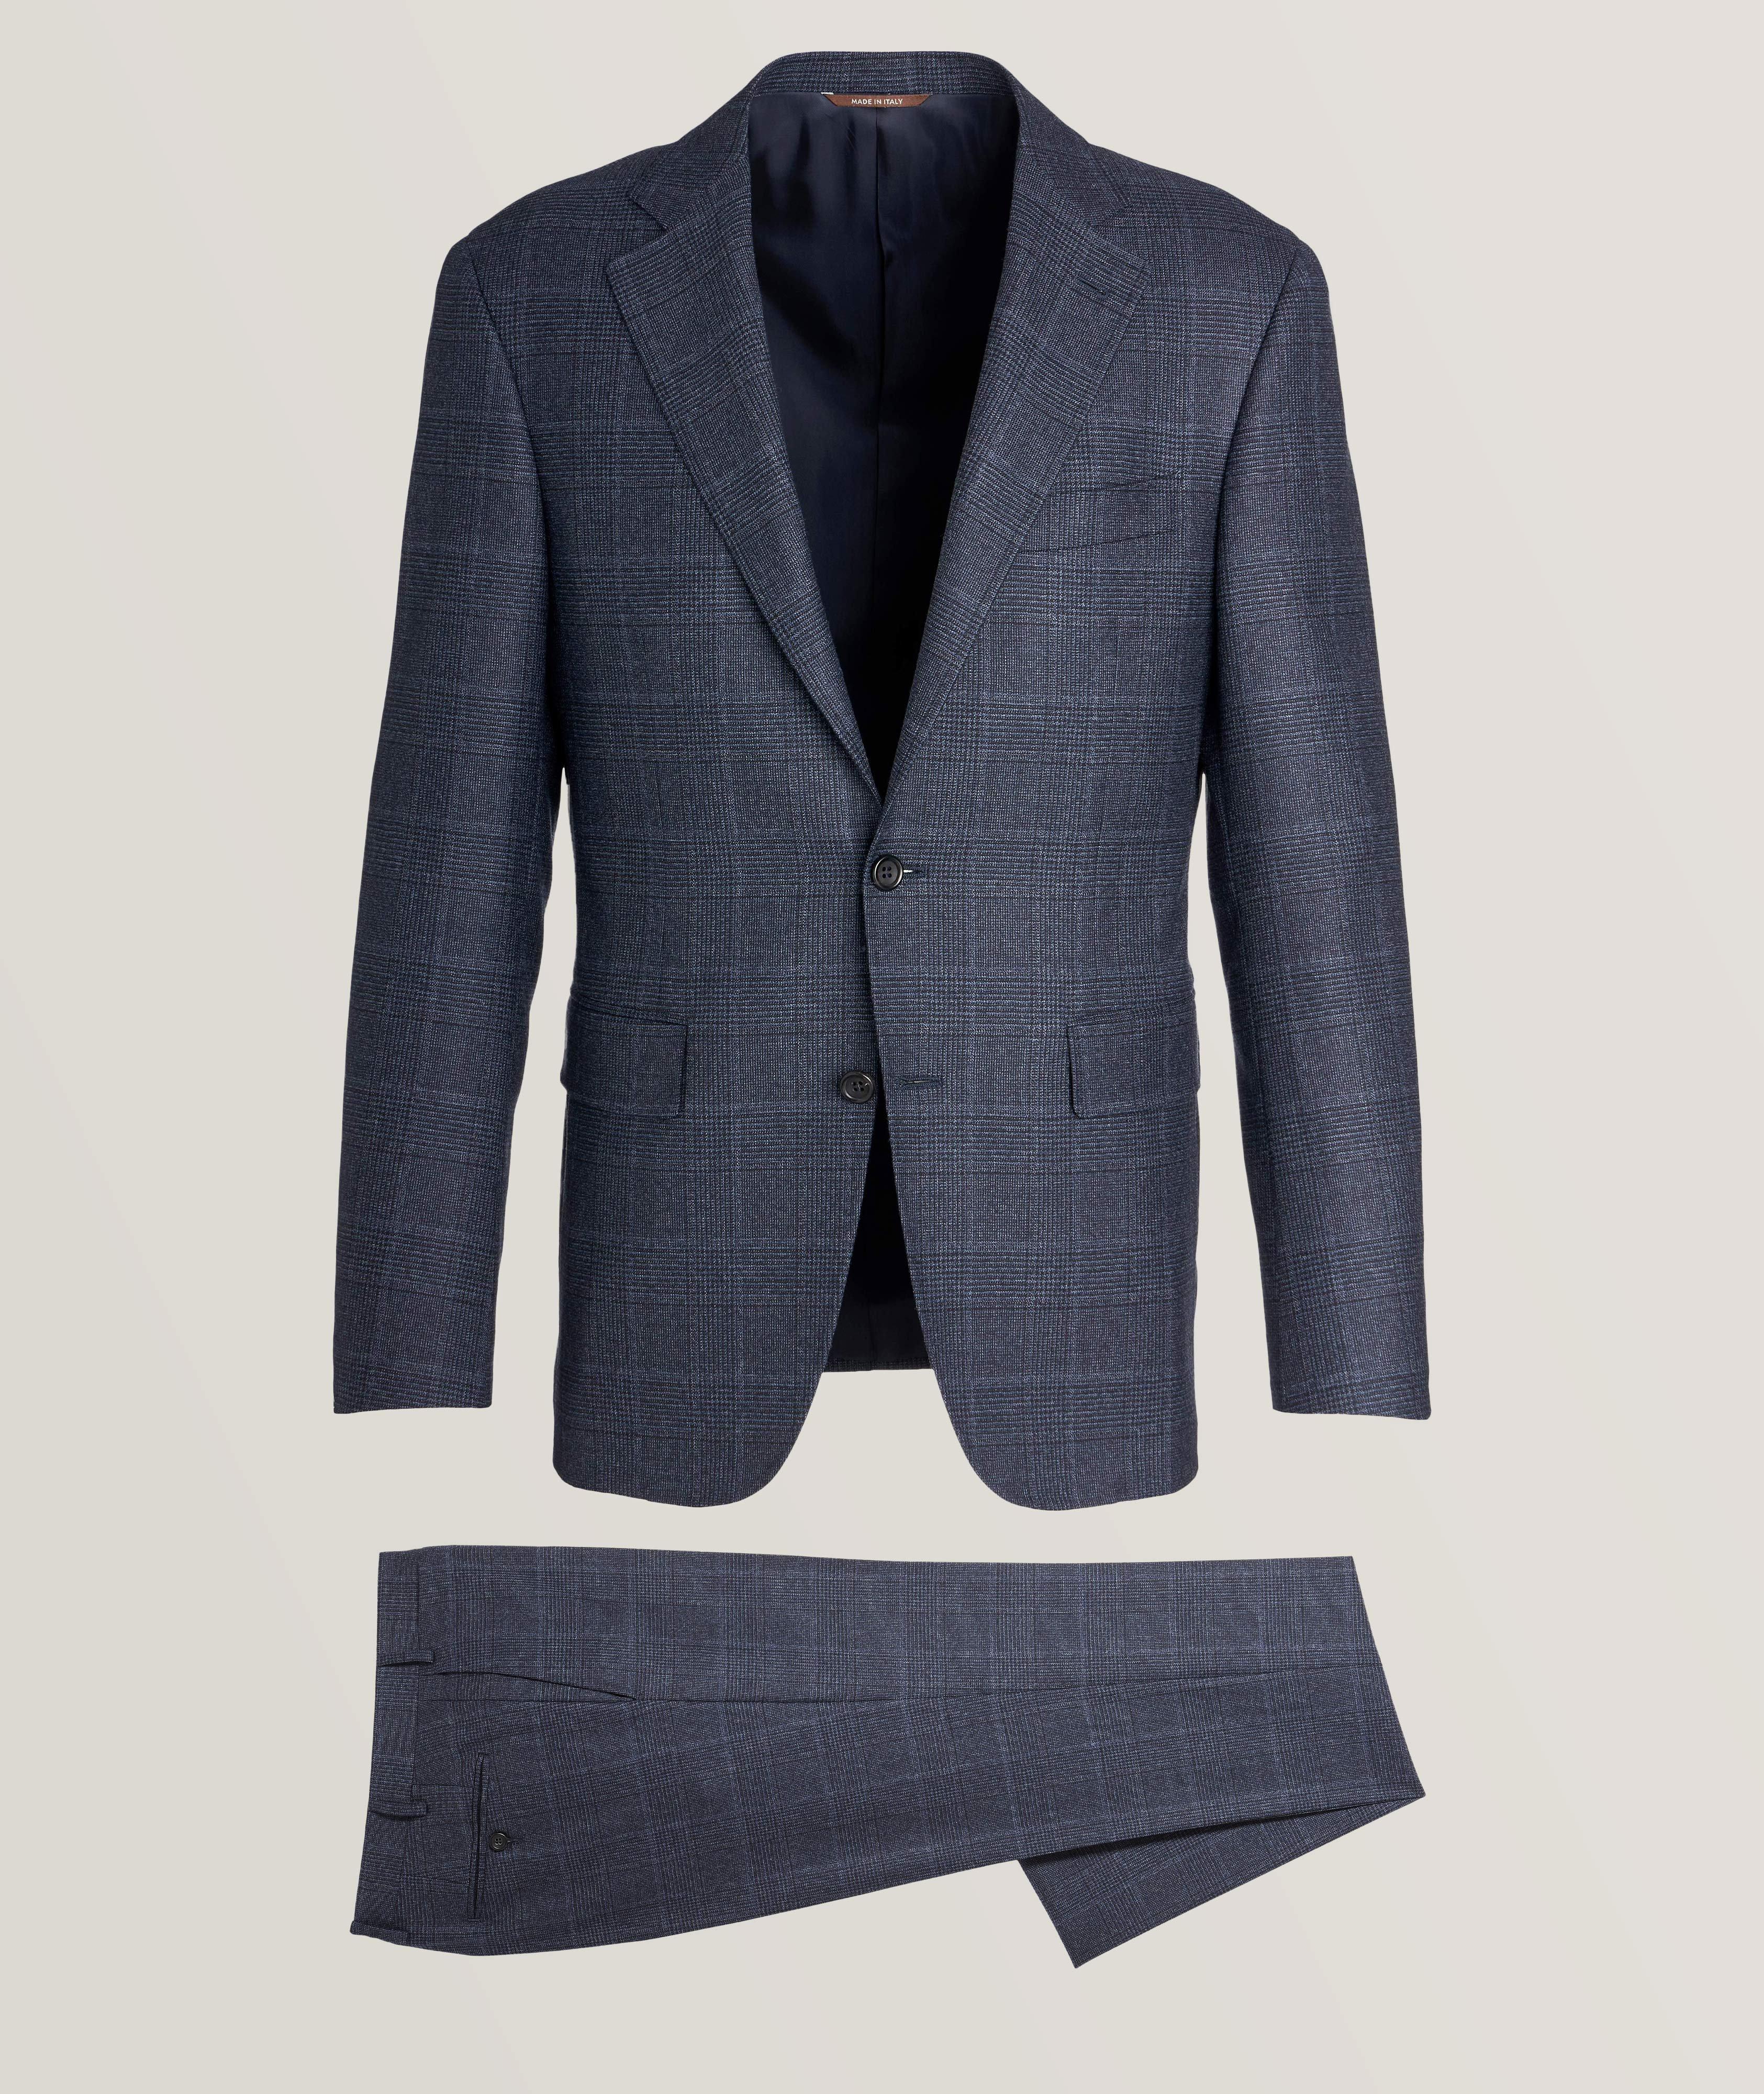 Kei Glen Check Natural Comfort Wool Suit image 0